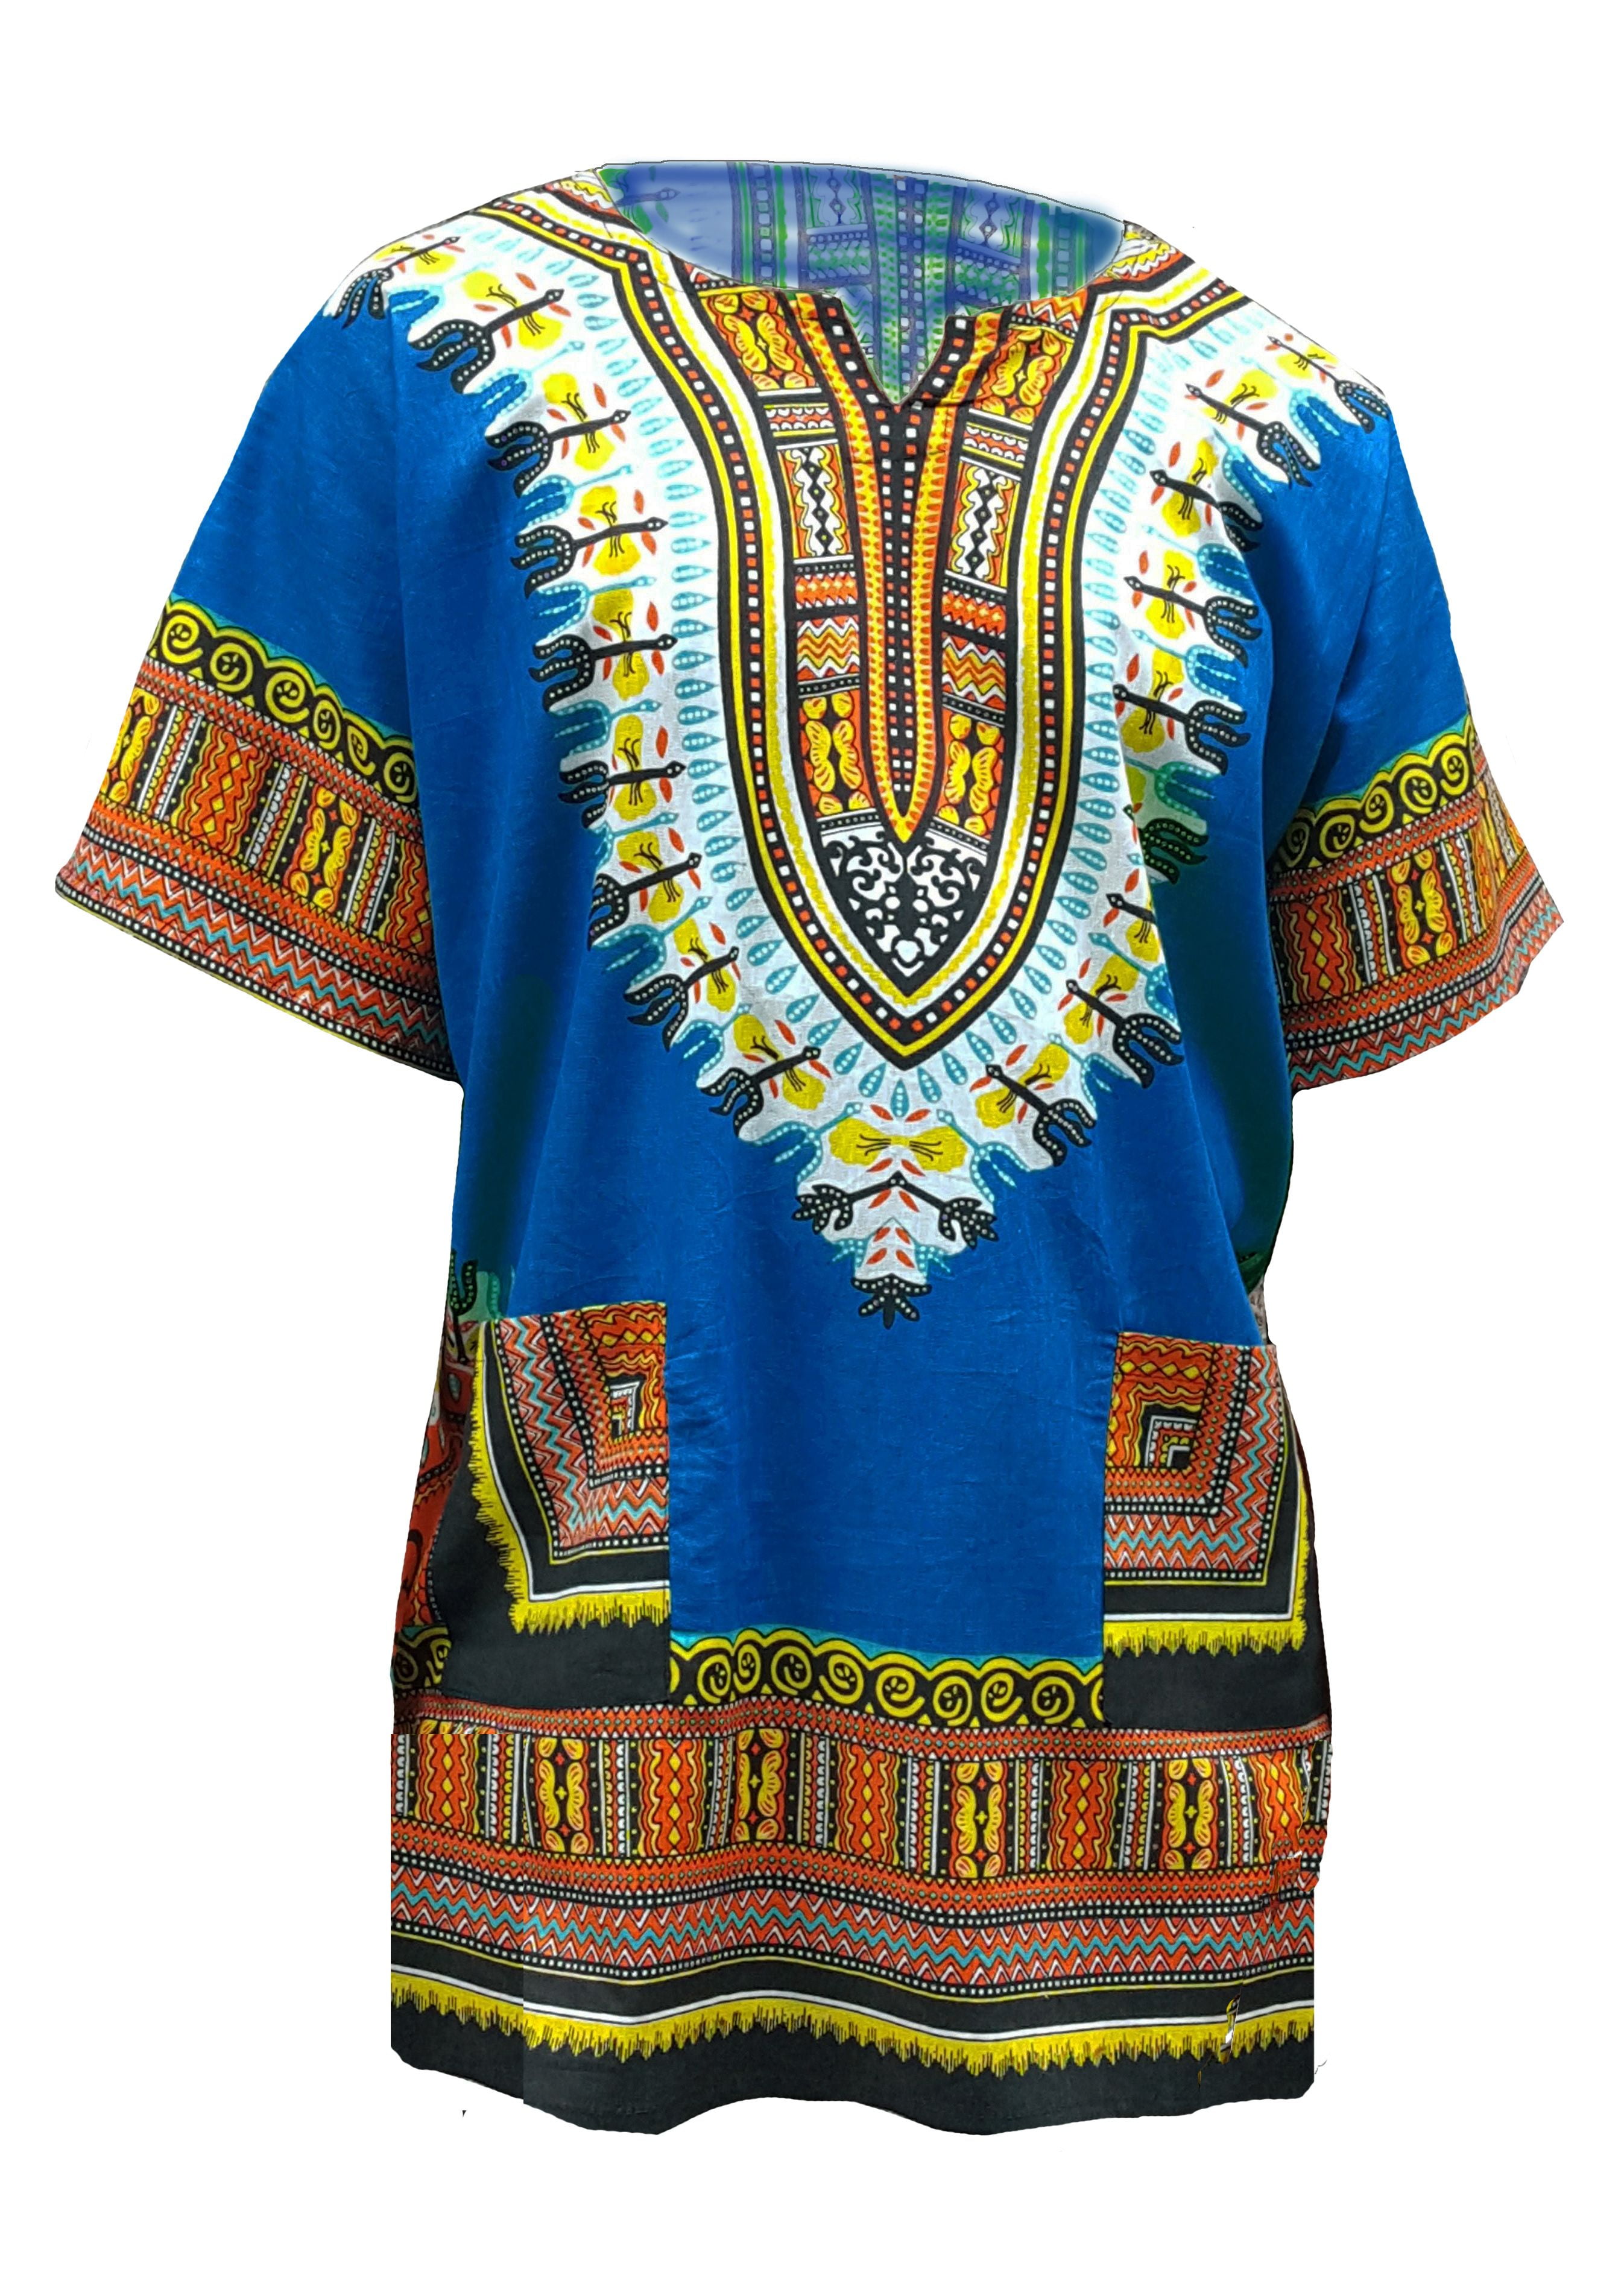 Blue African Print Dashiki Shirt from S to 7XL Plus Size - Walmart.com